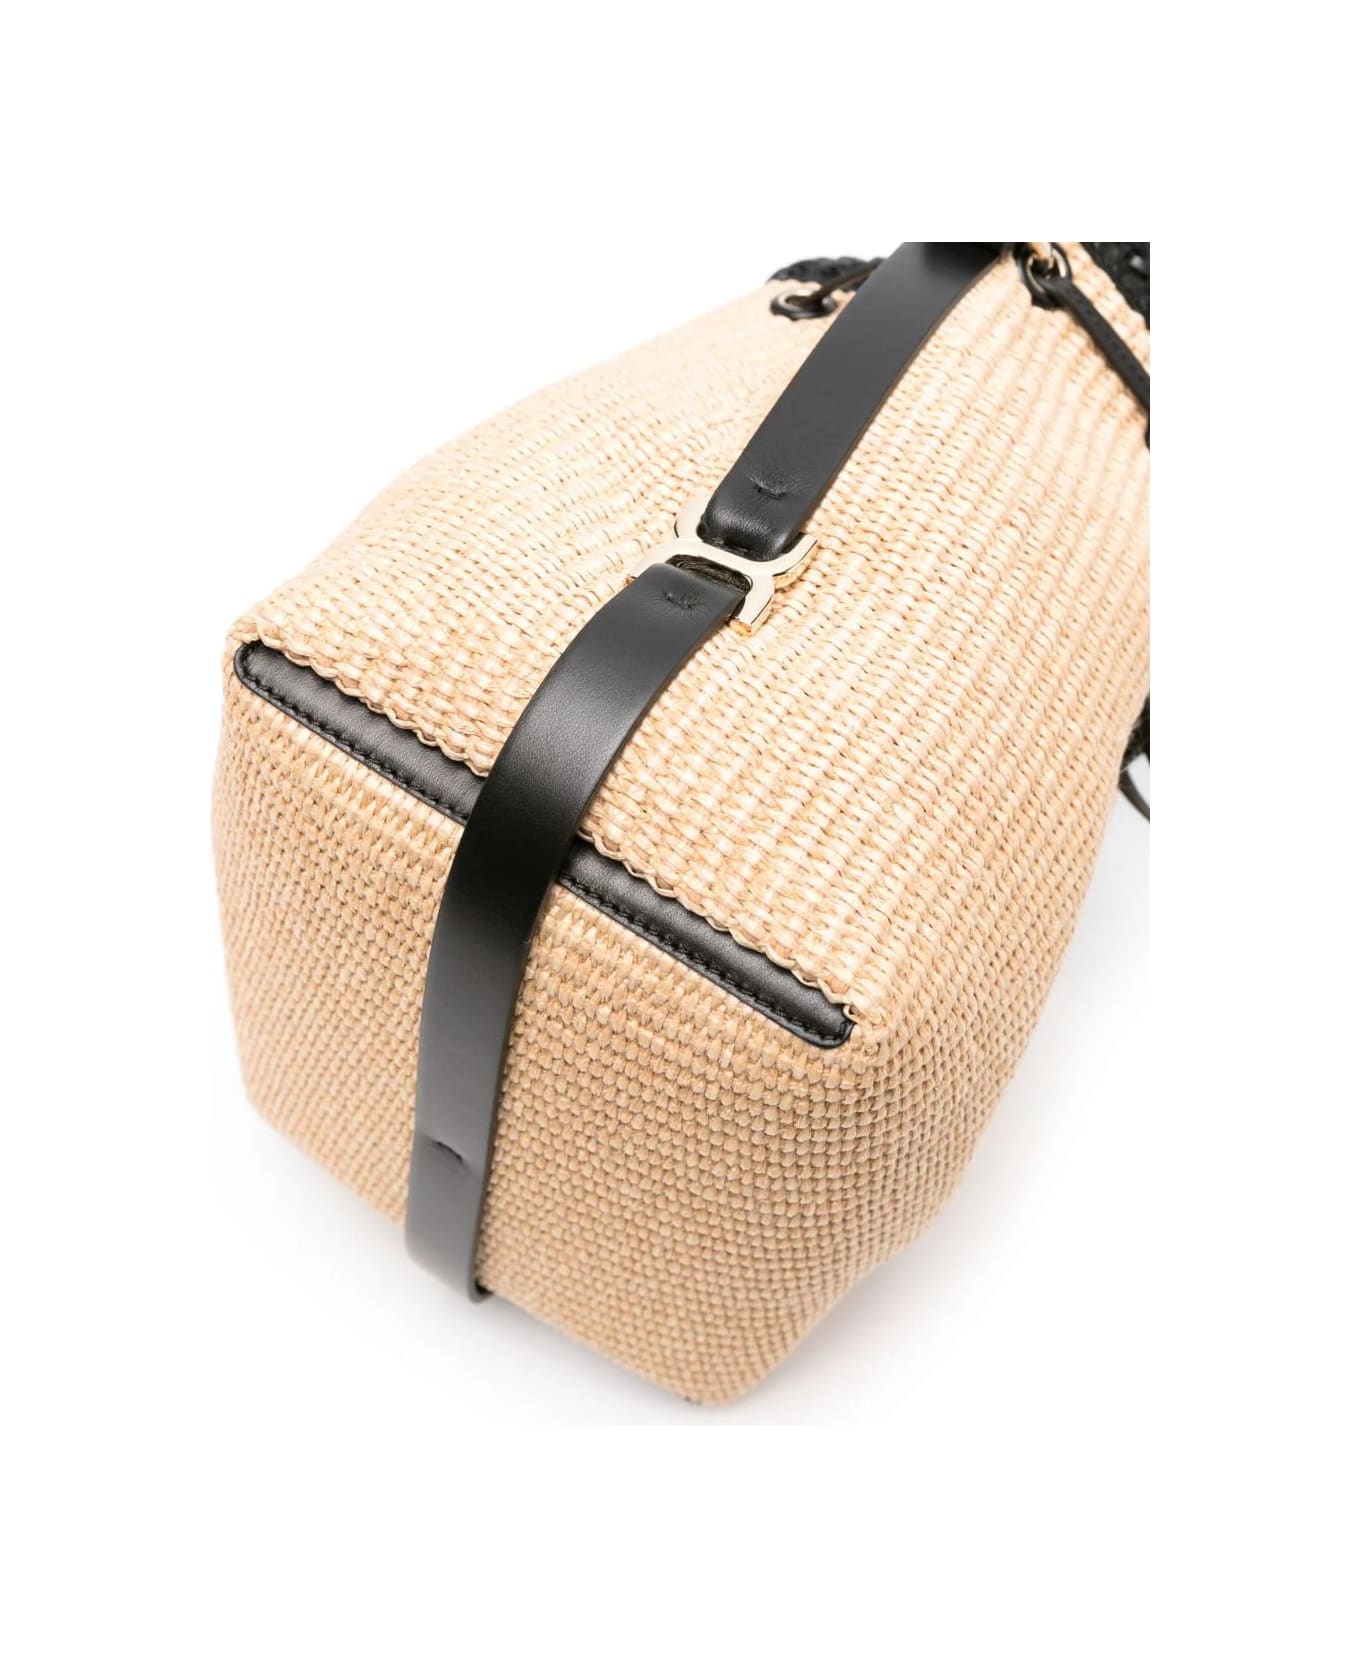 Chloé Marcie Bucket Bag In Hot Sand - Brown トートバッグ